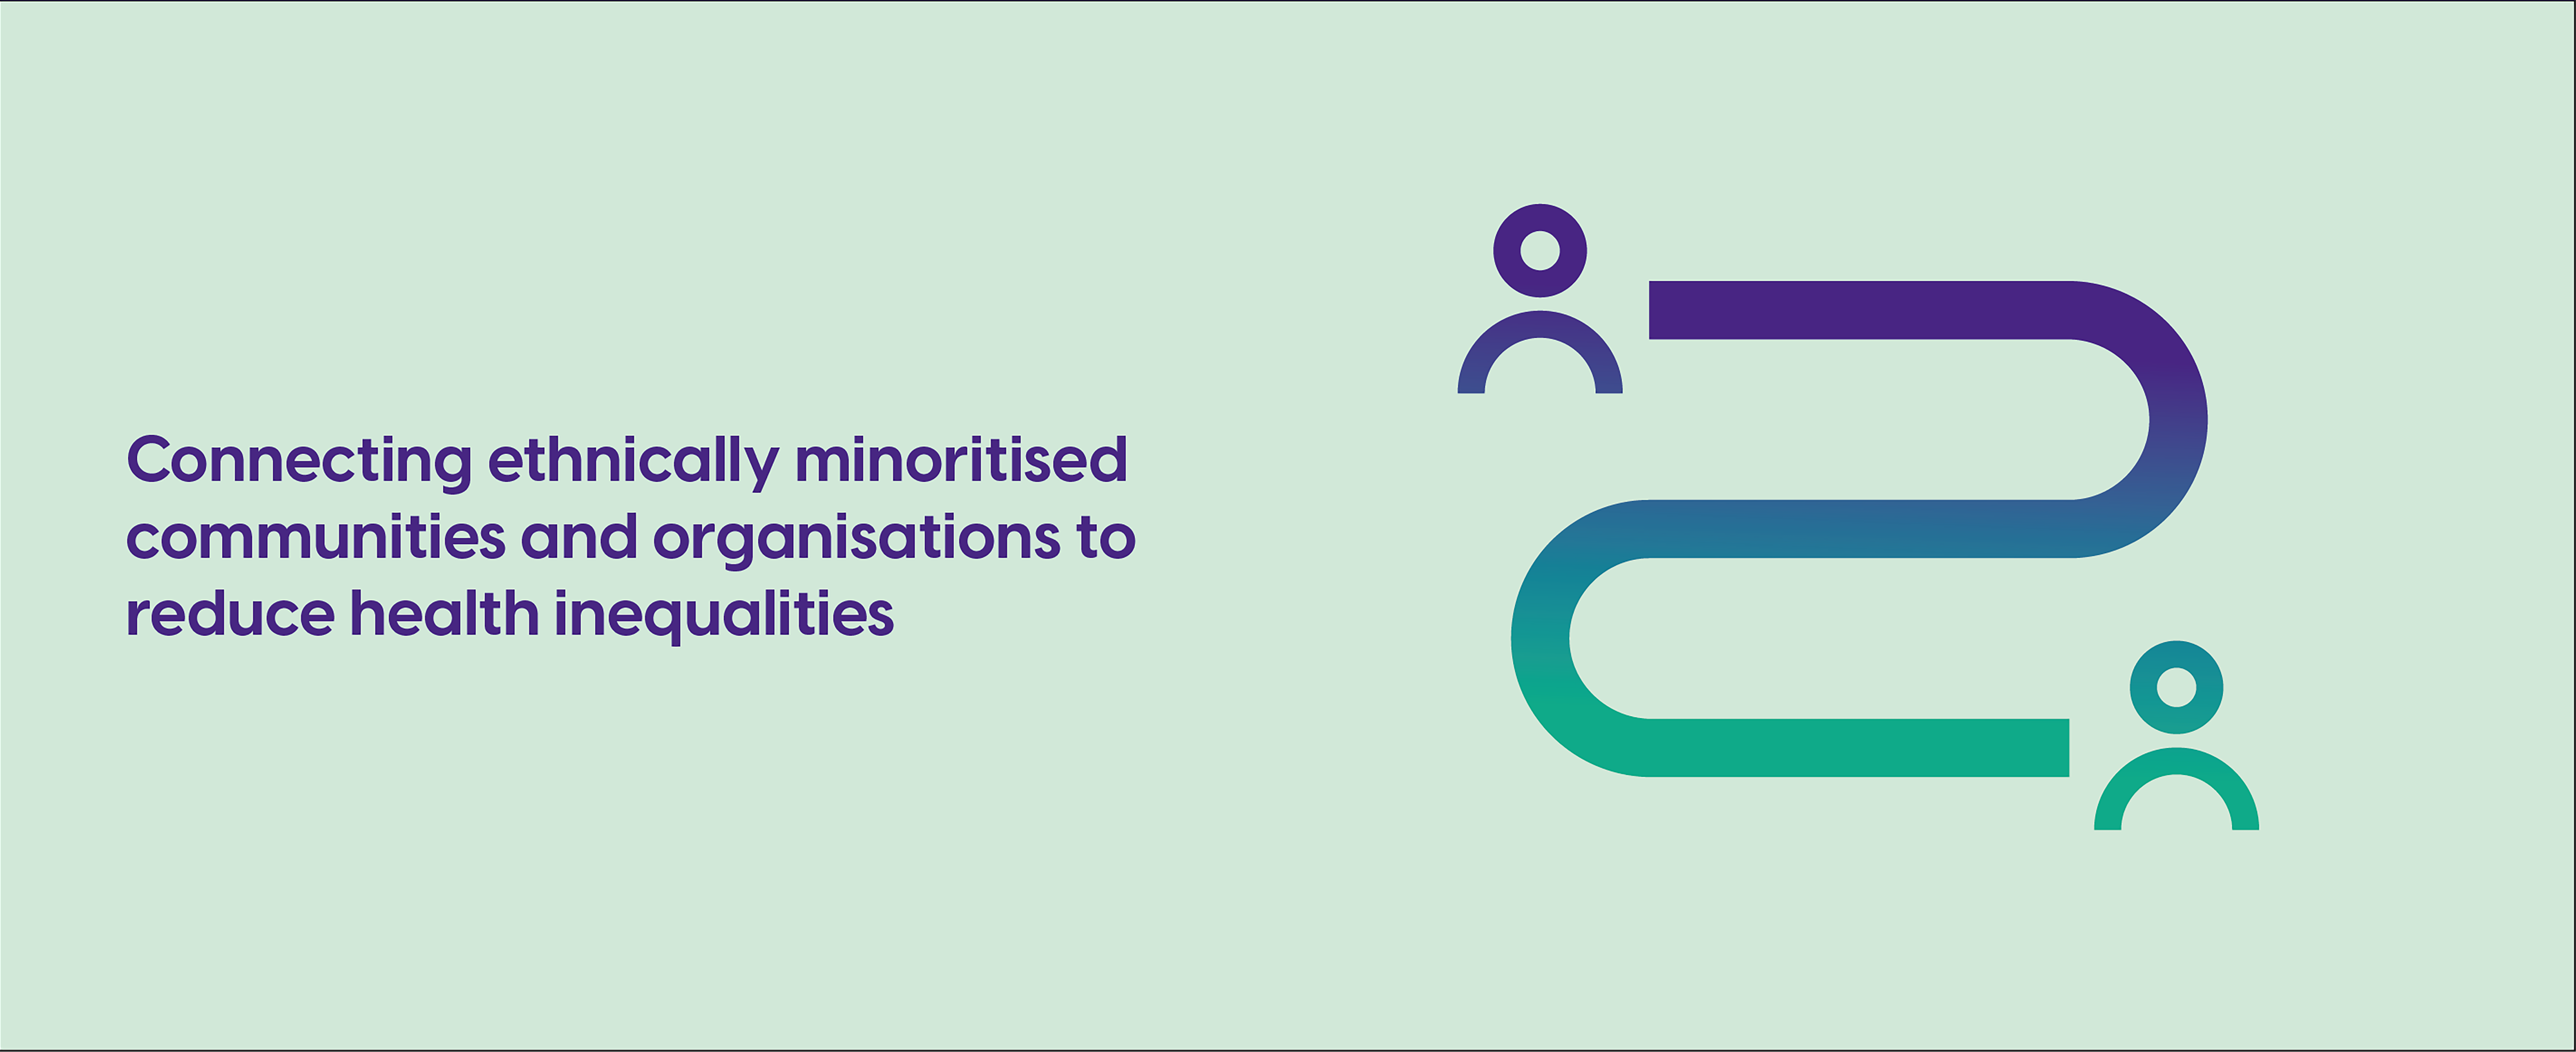 Connecting ethnically minoritised communities to organisations to reduce health inequalities